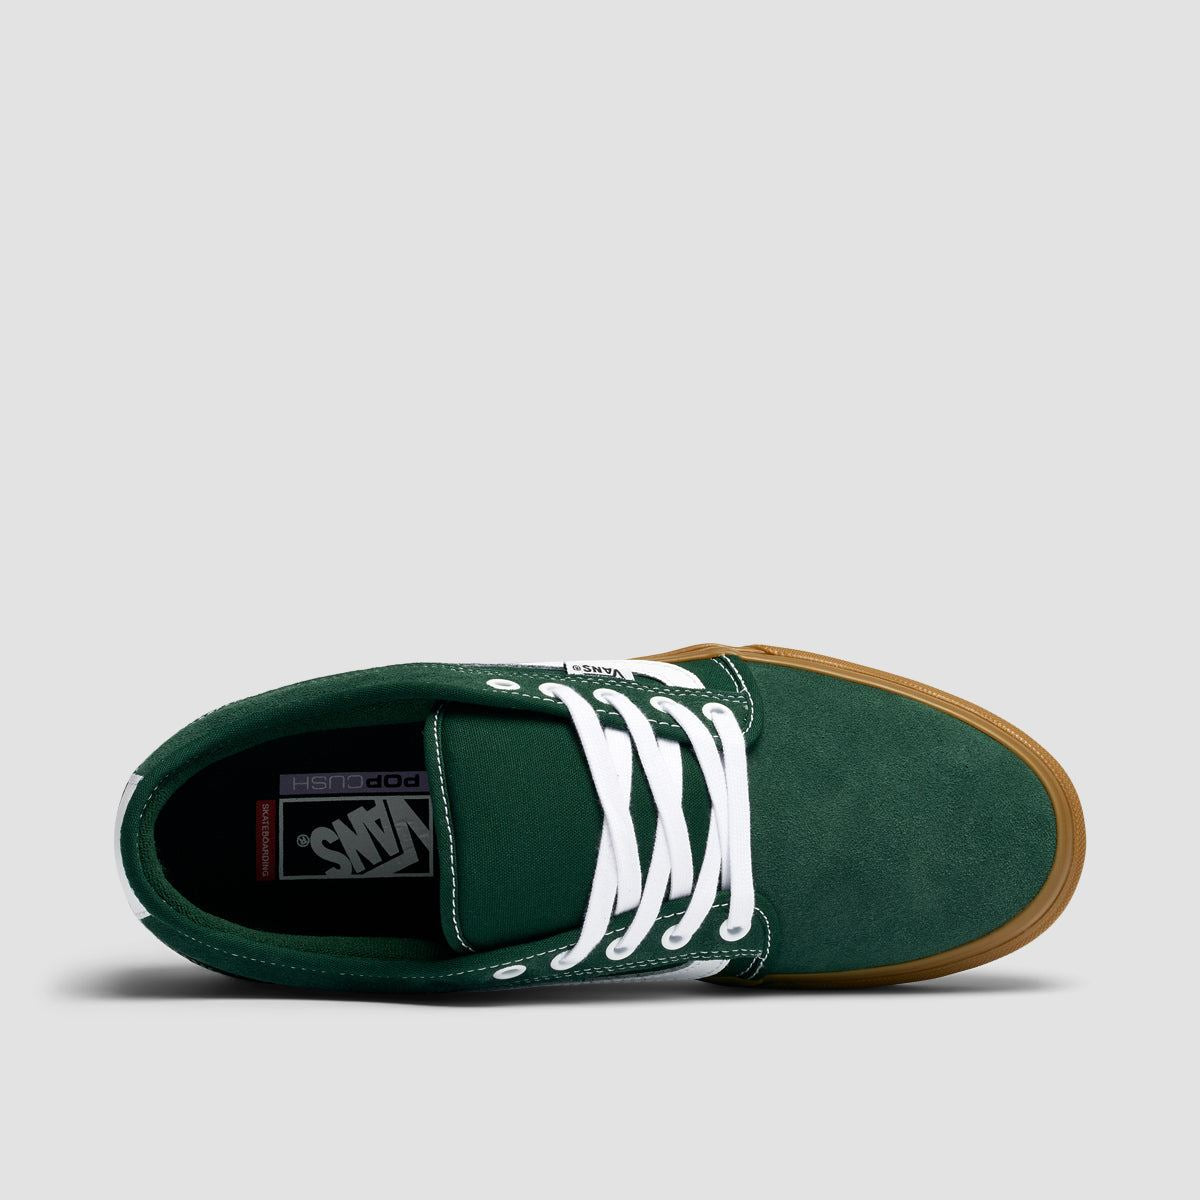 Vans Chukka Sidestripe Shoes - Dark Green/Gum